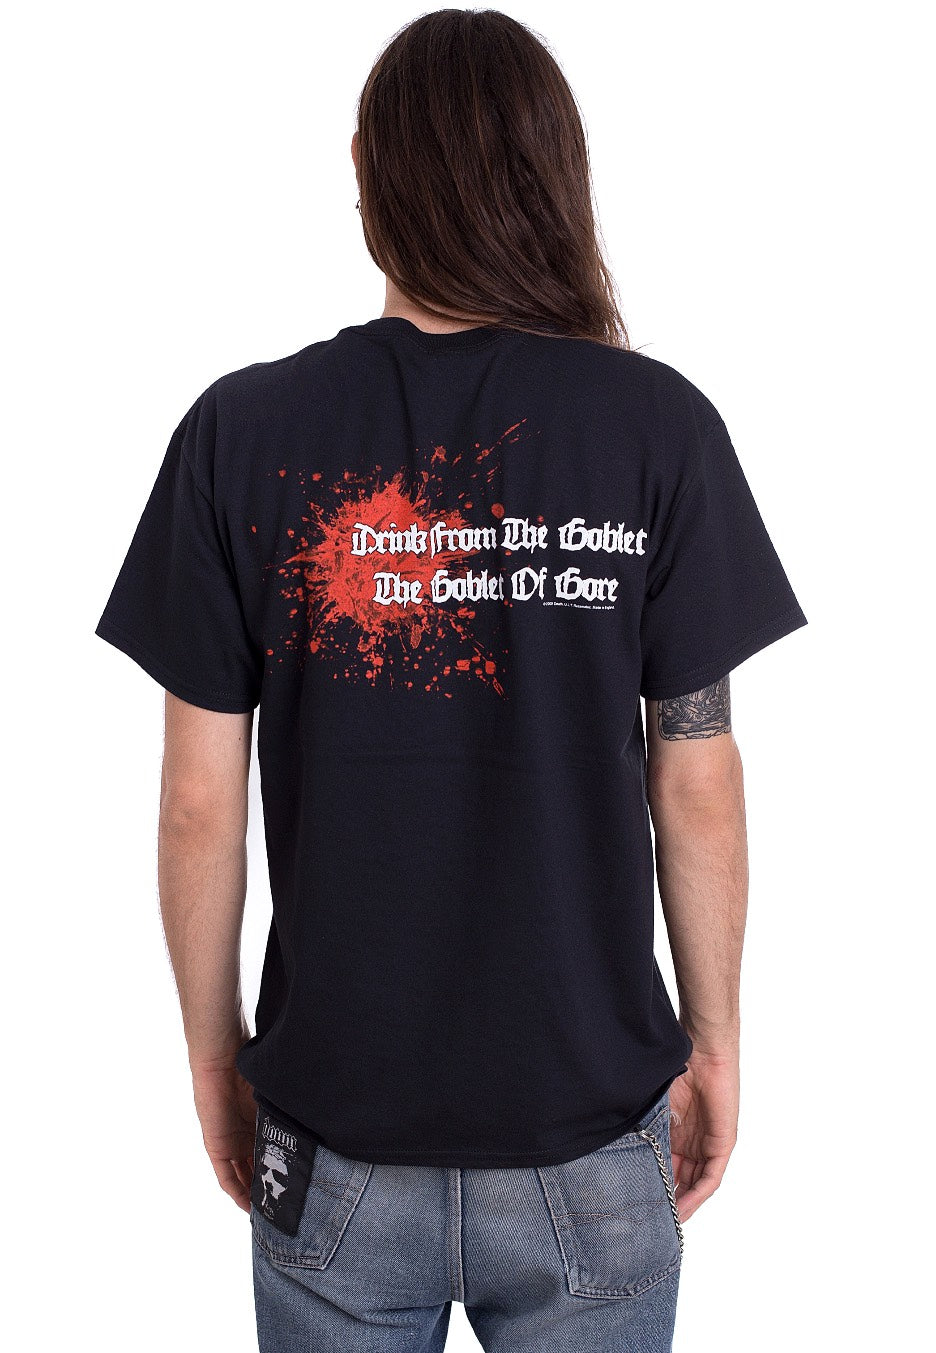 Death - Scream Bloody Gore - T-Shirt | Men-Image